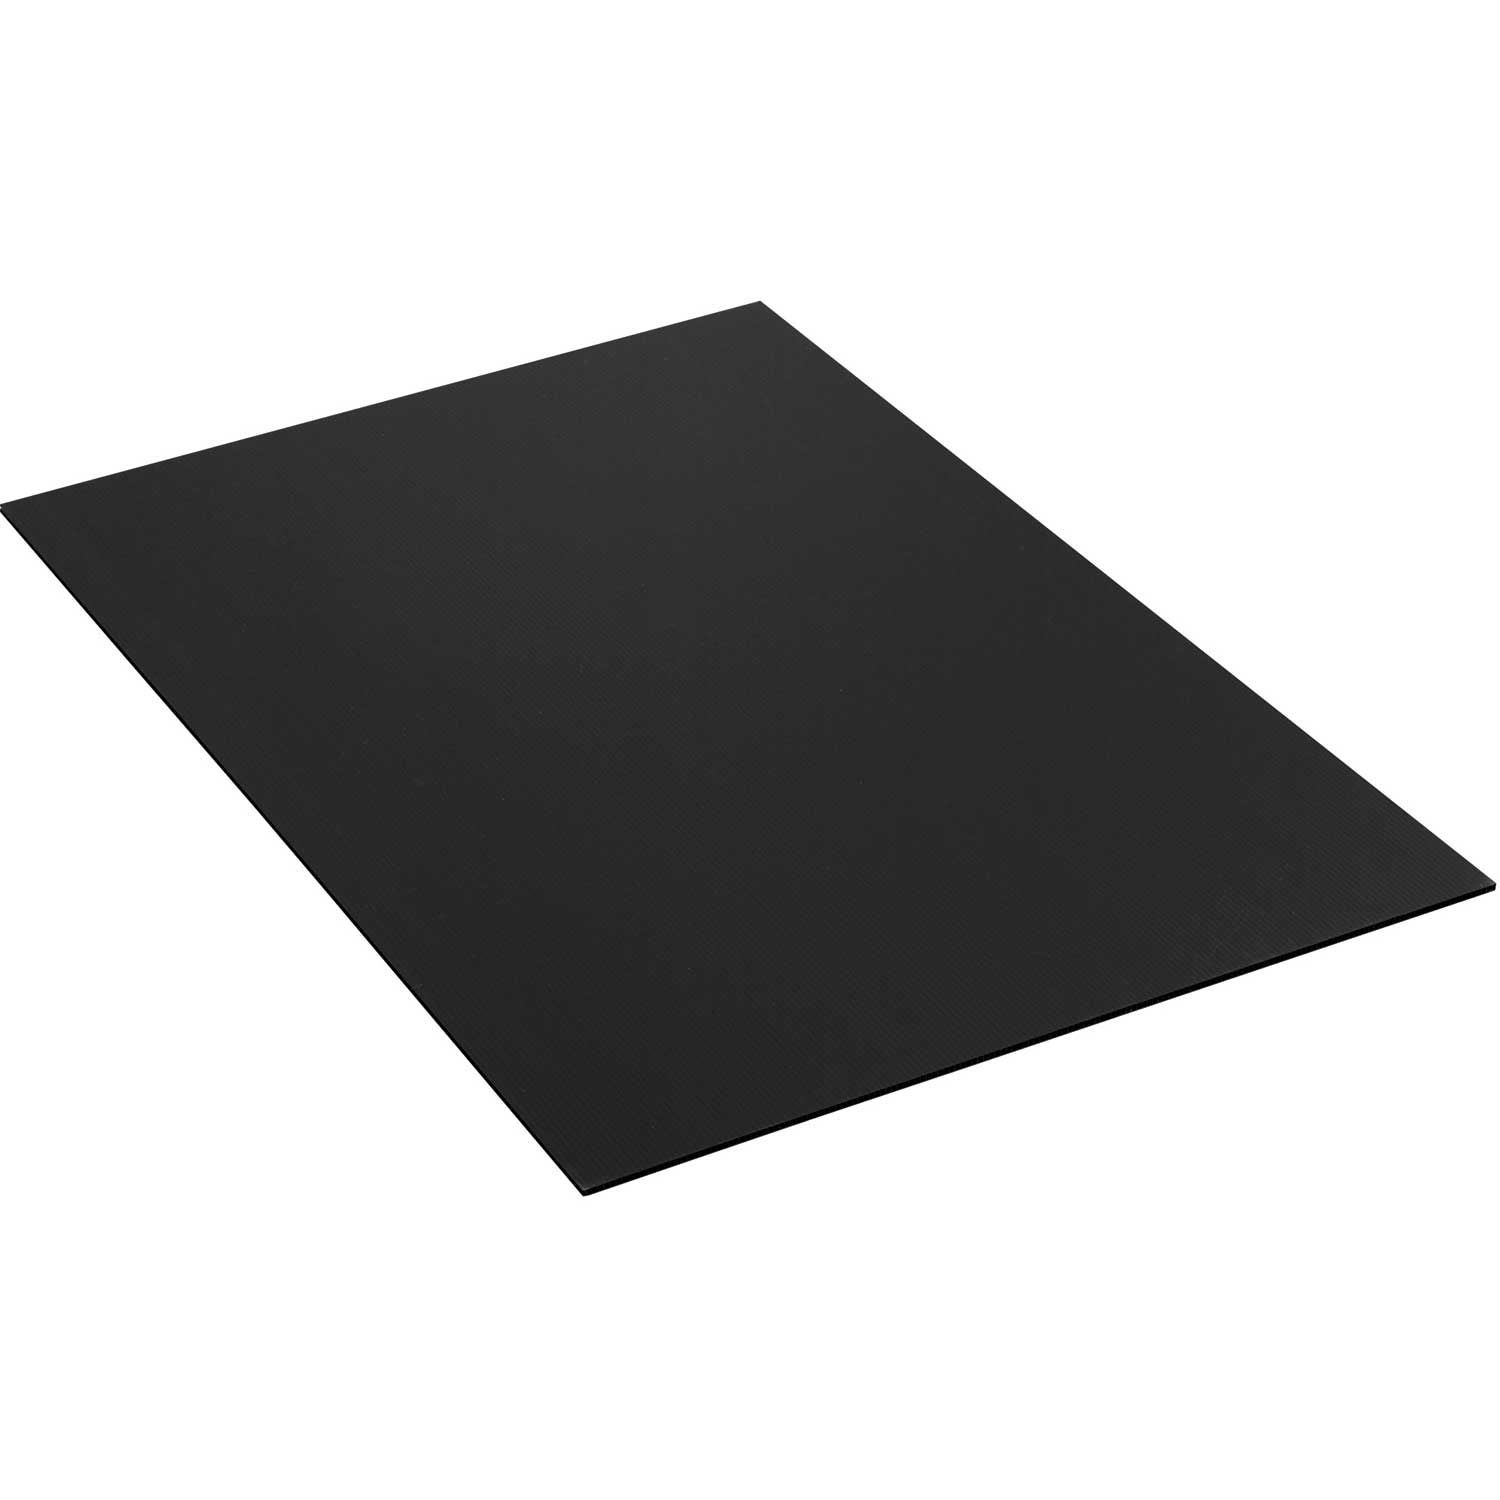 black cardboard sheet